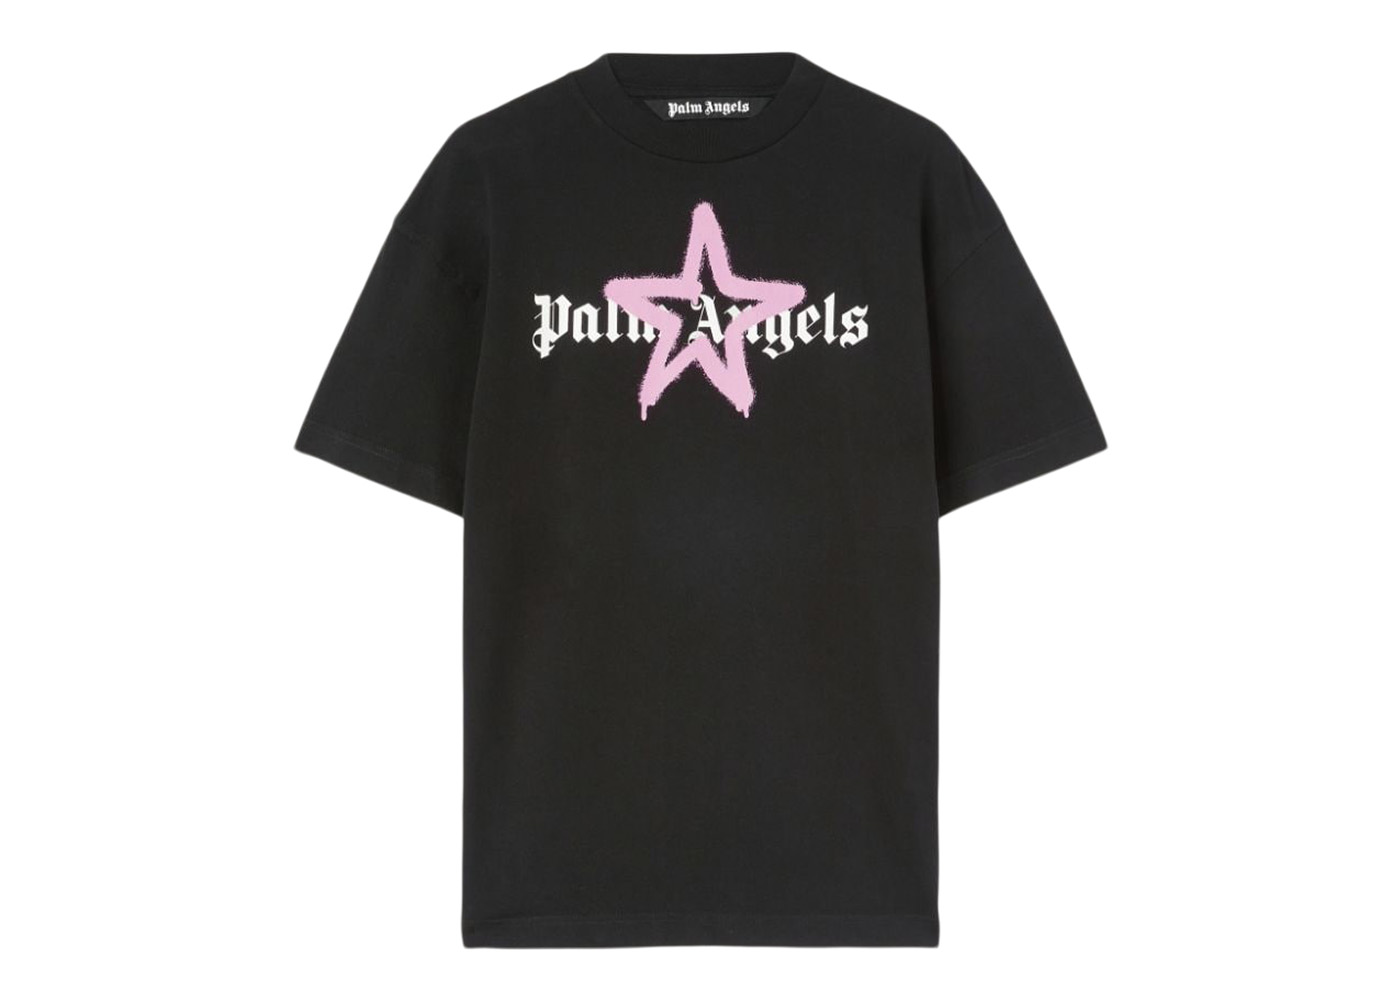 Palm Angels Las Vegas Sprayed T-Shirt Black/White